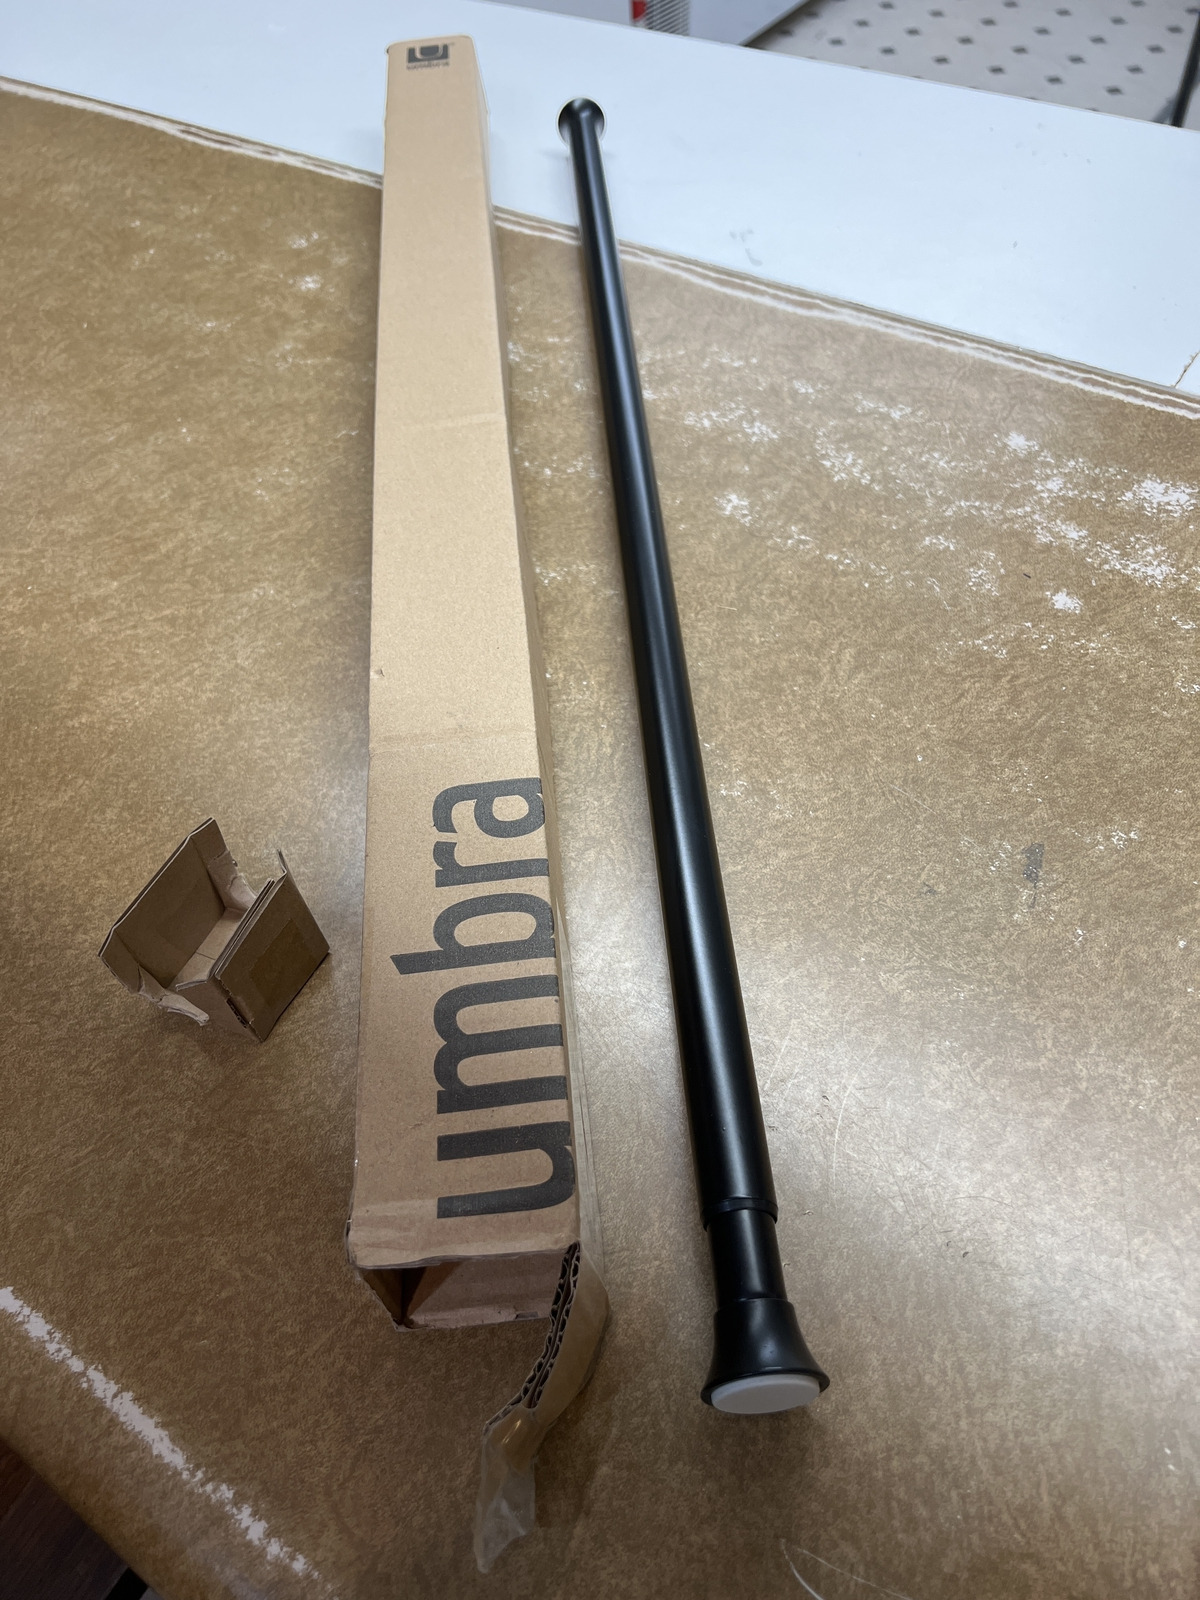 Umbra Tension Rod 36”x54” black - $9.55